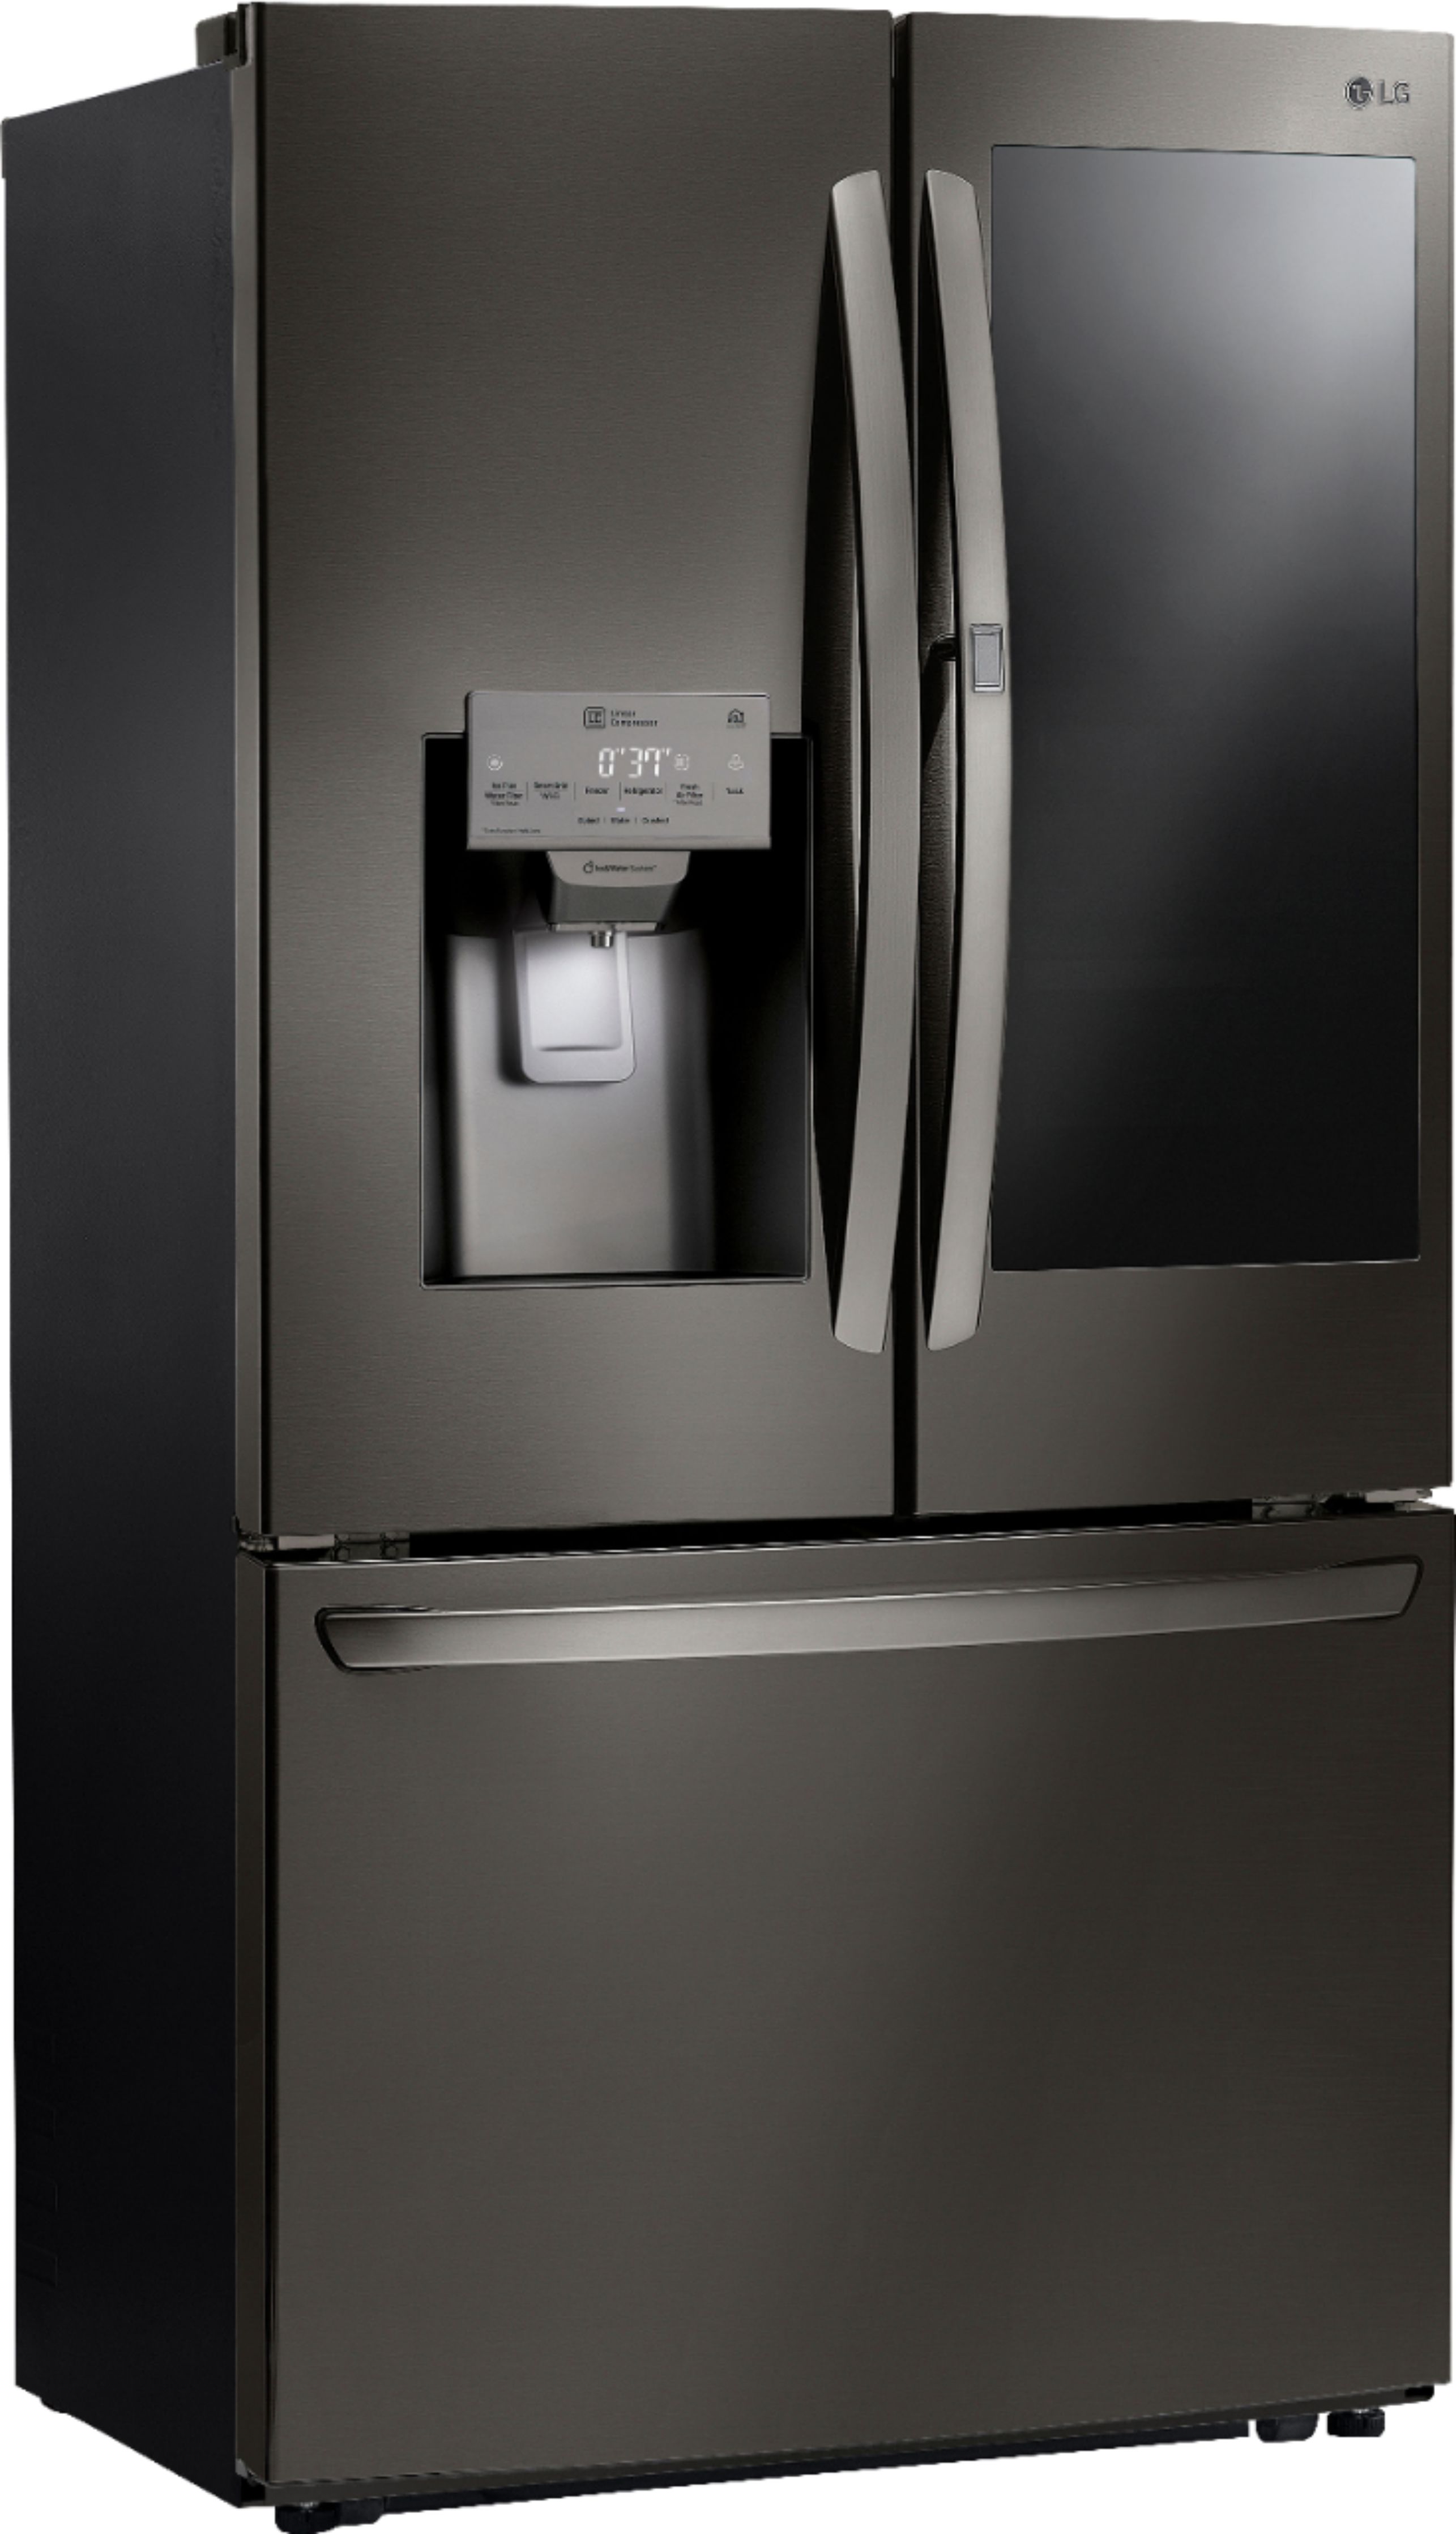 Angle View: LG - 21.9 Cu. Ft. French Door-in-Door Counter-Depth Refrigerator - Black stainless steel